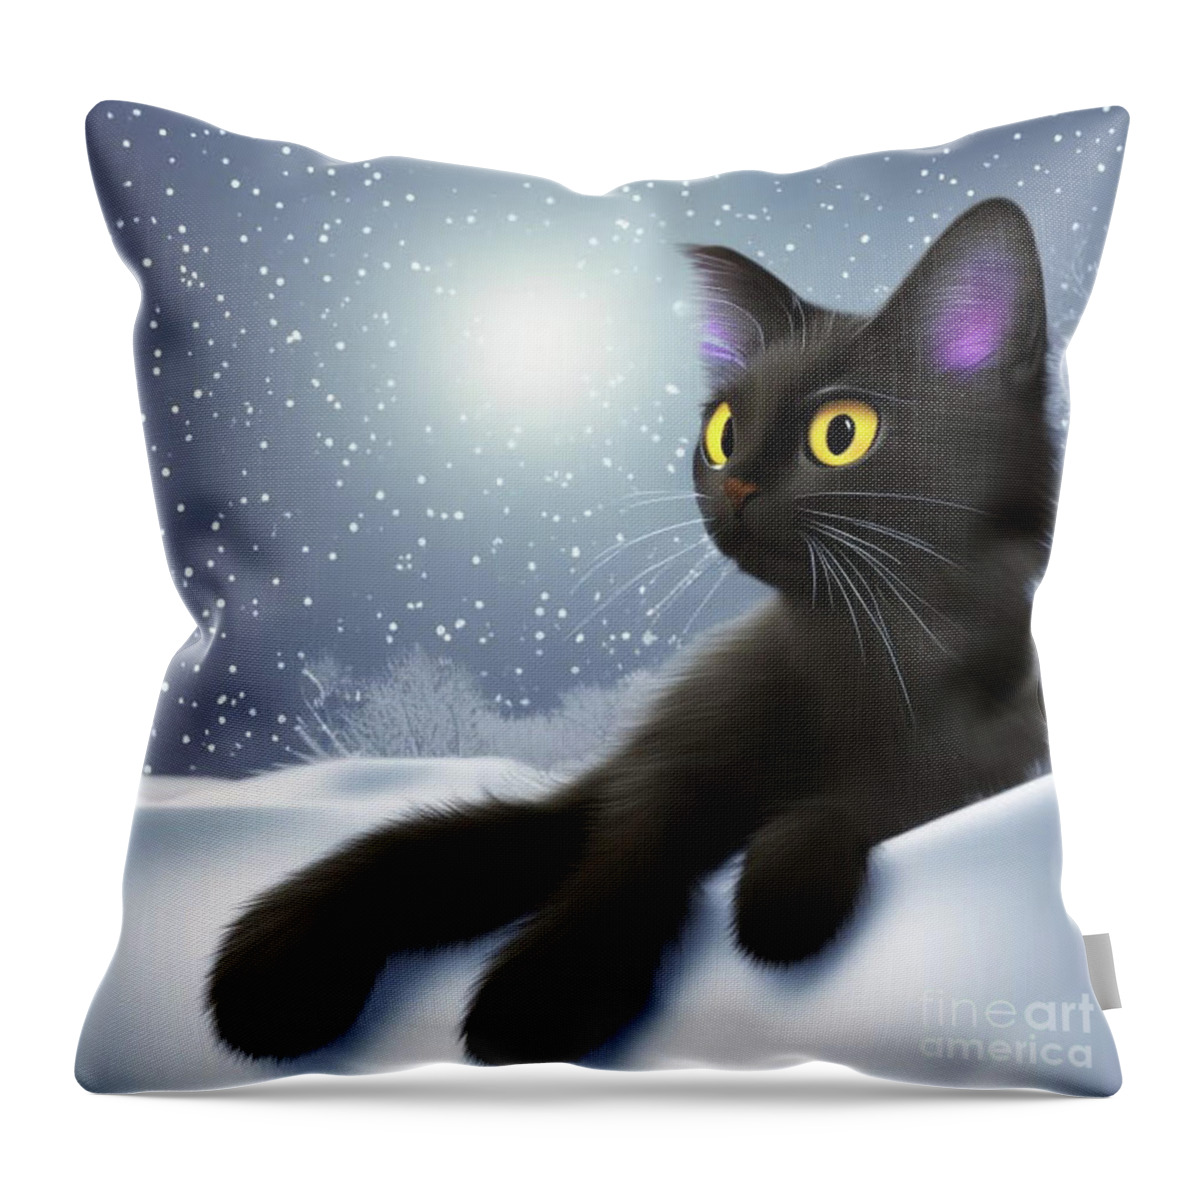 Snow; Kitty; Cat; Black Cat; Moon; Snowbank; Digital Art; Square; Children's Art; Throw Pillow featuring the digital art Snow Kitty by Tina Uihlein